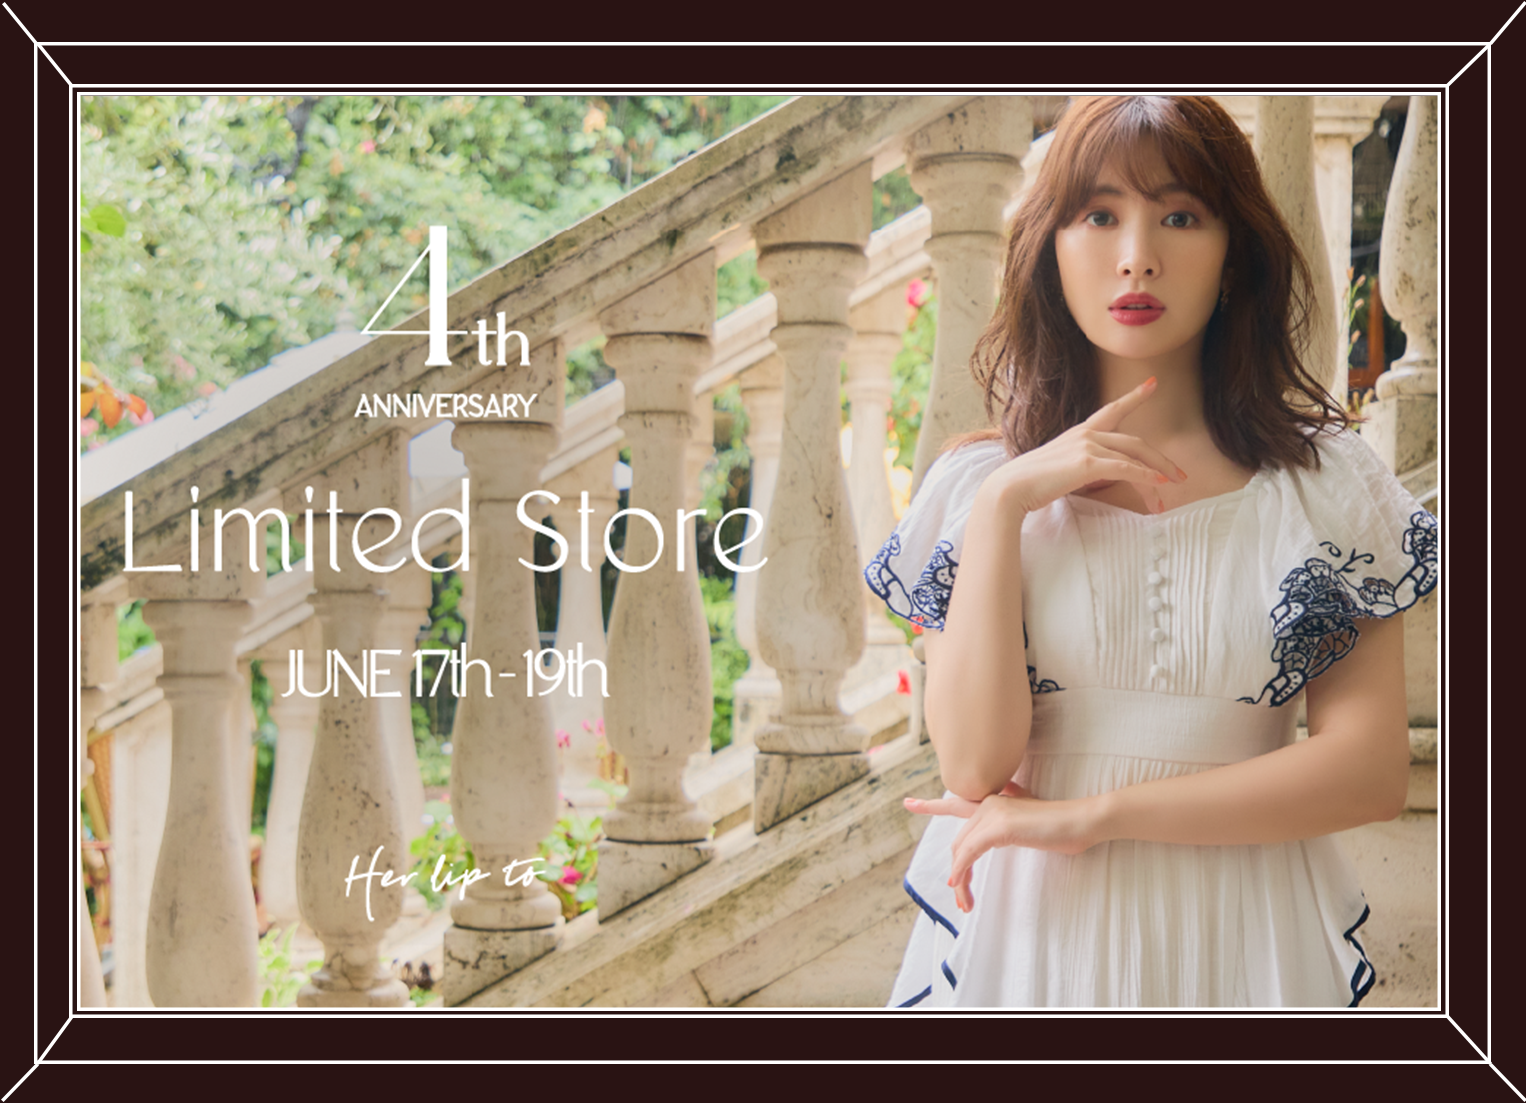 「4th Anniversary Limited Store June 17th-19th Her lip to」と書かれた、小嶋陽菜が白と紺のワンピースで写ってるおしゃれな絵